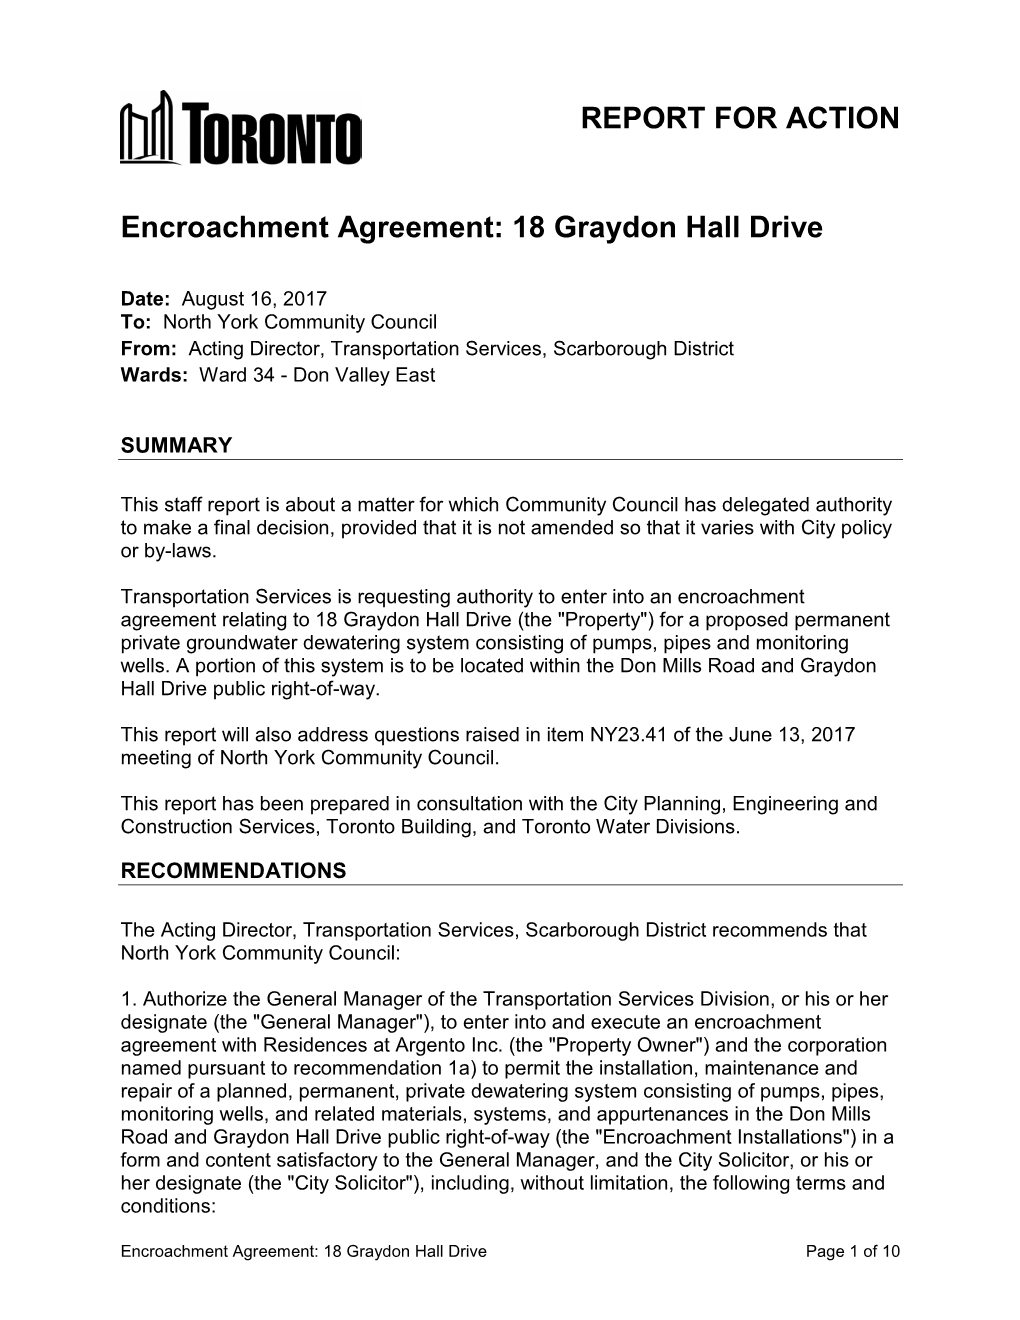 Encroachment Agreement: 18 Graydon Hall Drive